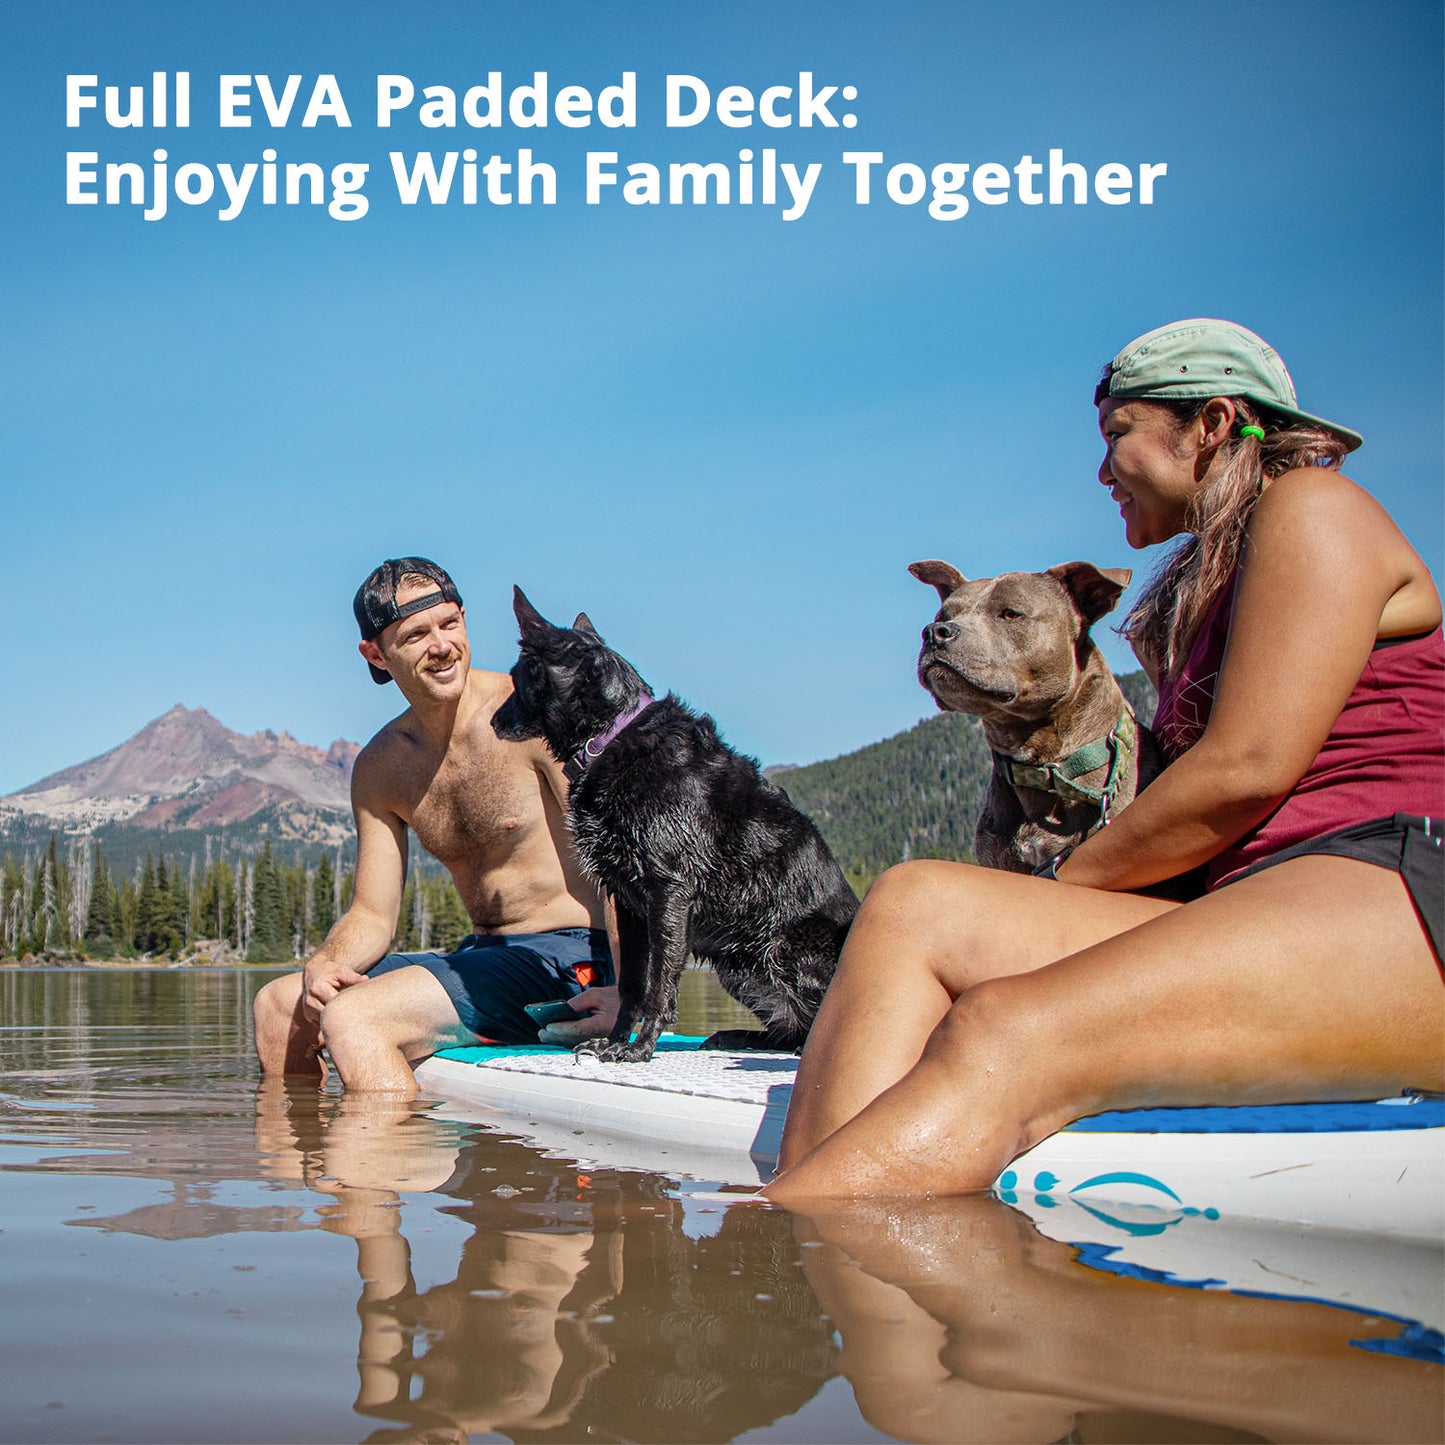 Full EVA Padded Deck Paddle Board